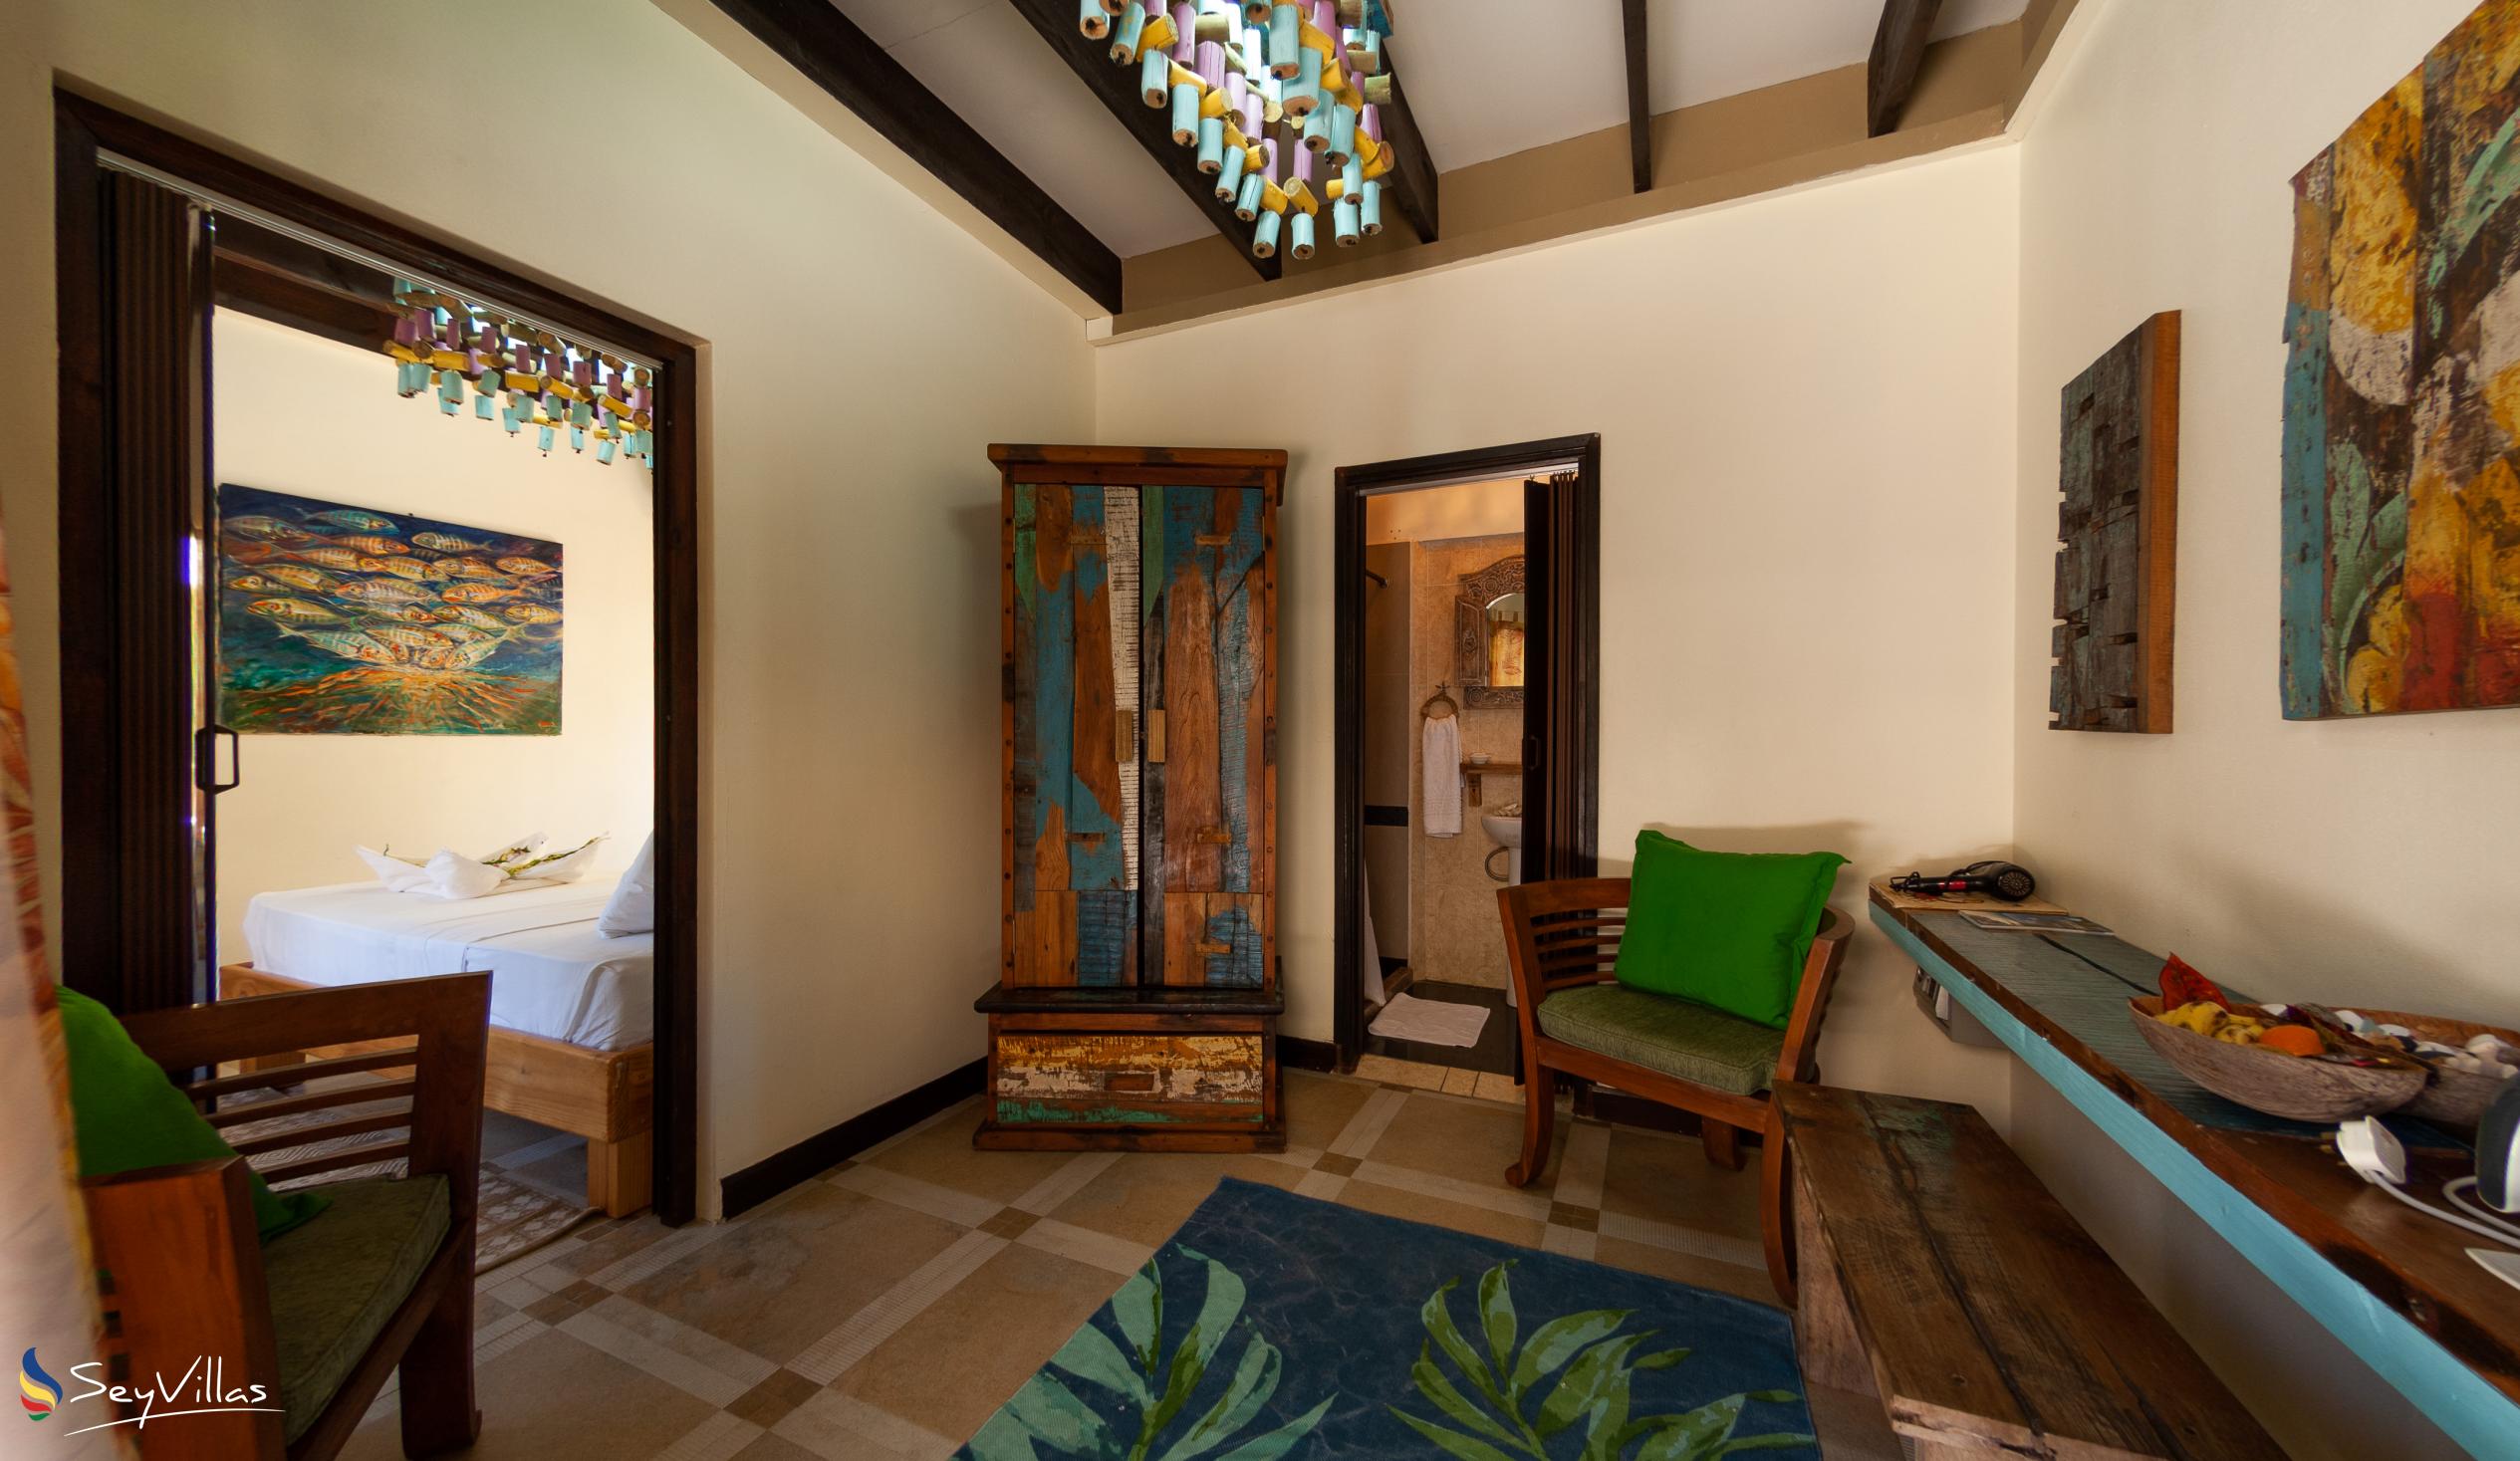 Foto 49: Villas des Alizes - Klassik-Zimmer mit Poolblick - Praslin (Seychellen)